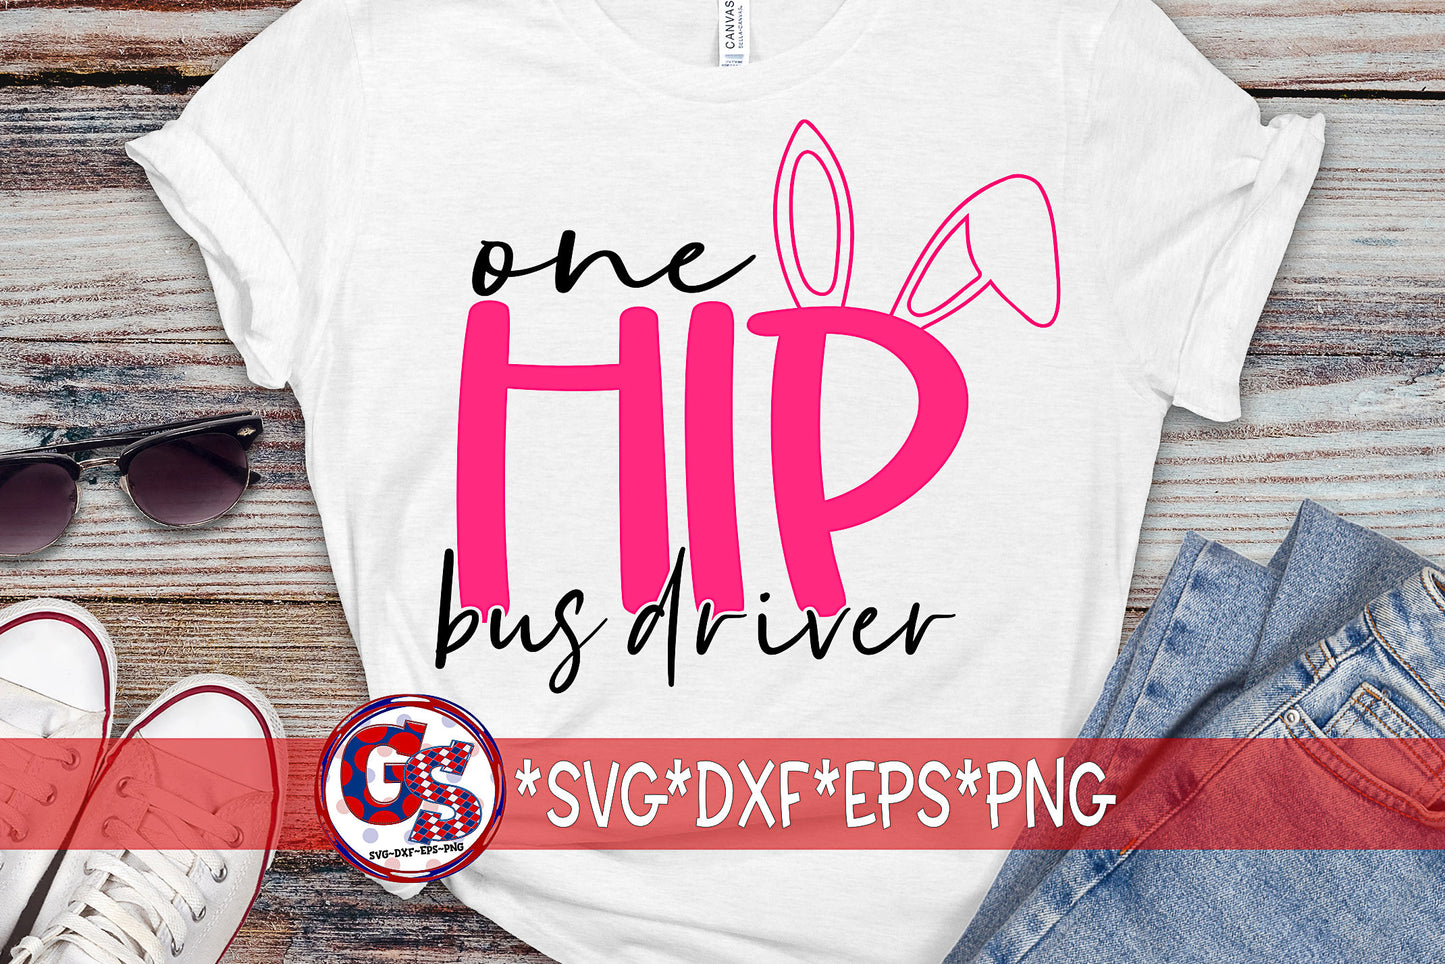 Easter One Hip Bus Driver svg dxf eps png. Easter Bus Driver SvG | One Hip Bus Driver DxF | Bus Driver SvG | Instant Download Cut File